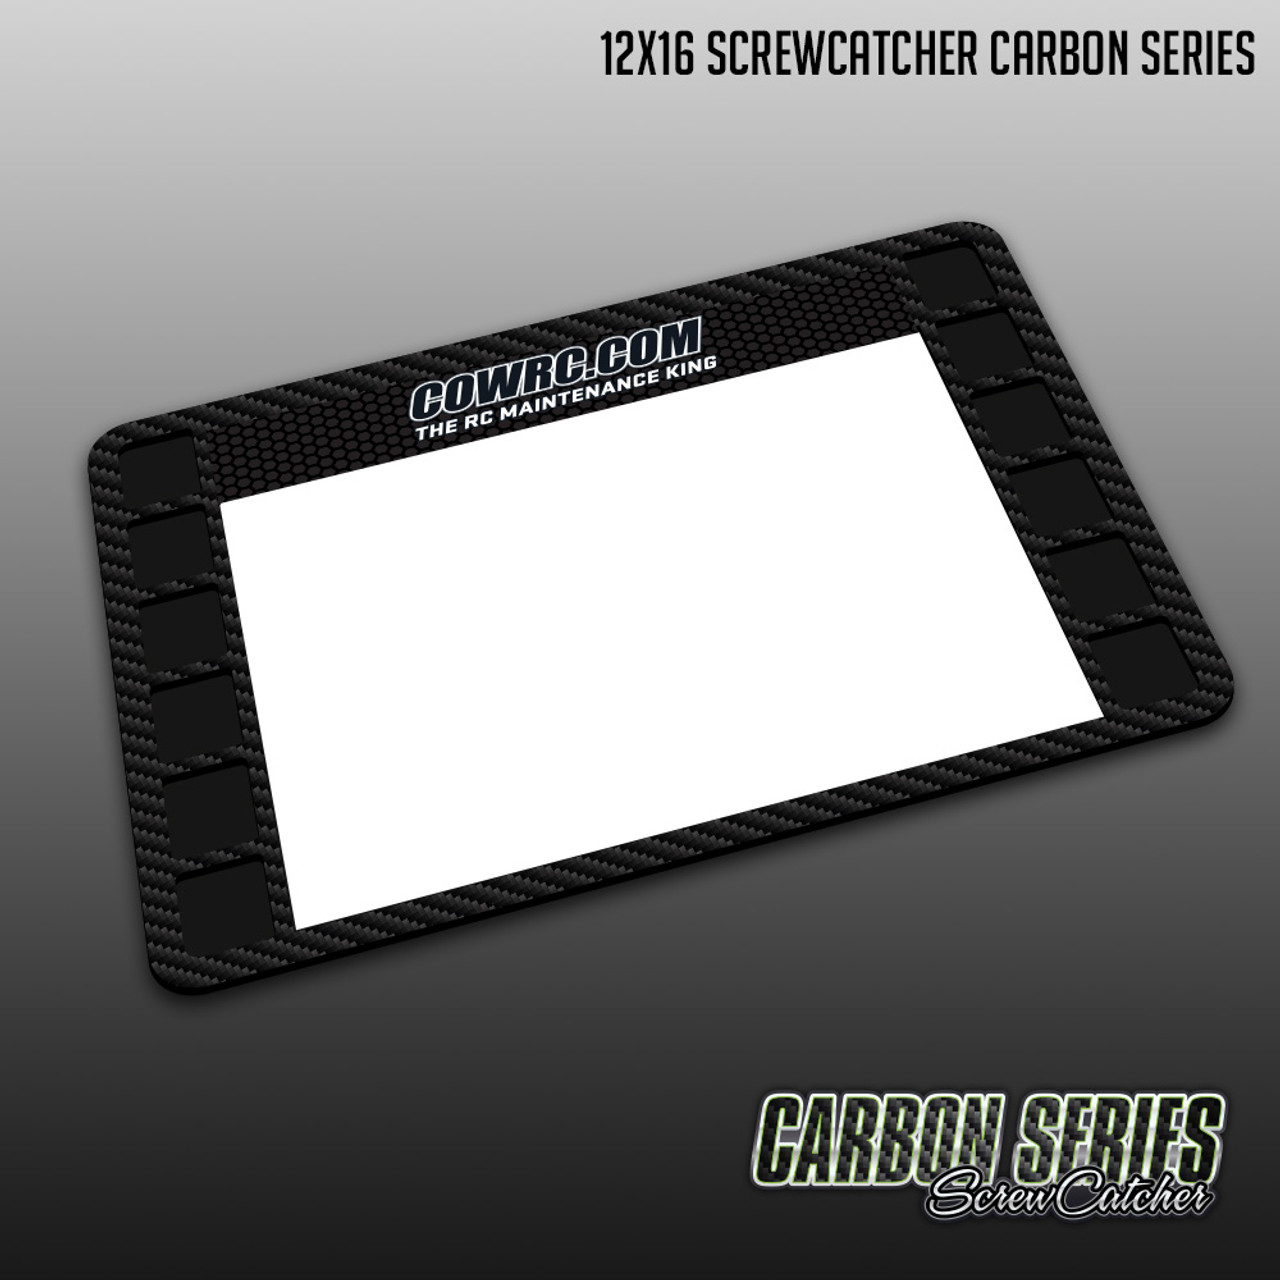 12" x 16" Screw Catcher Carbon Series & Magnetics Combo